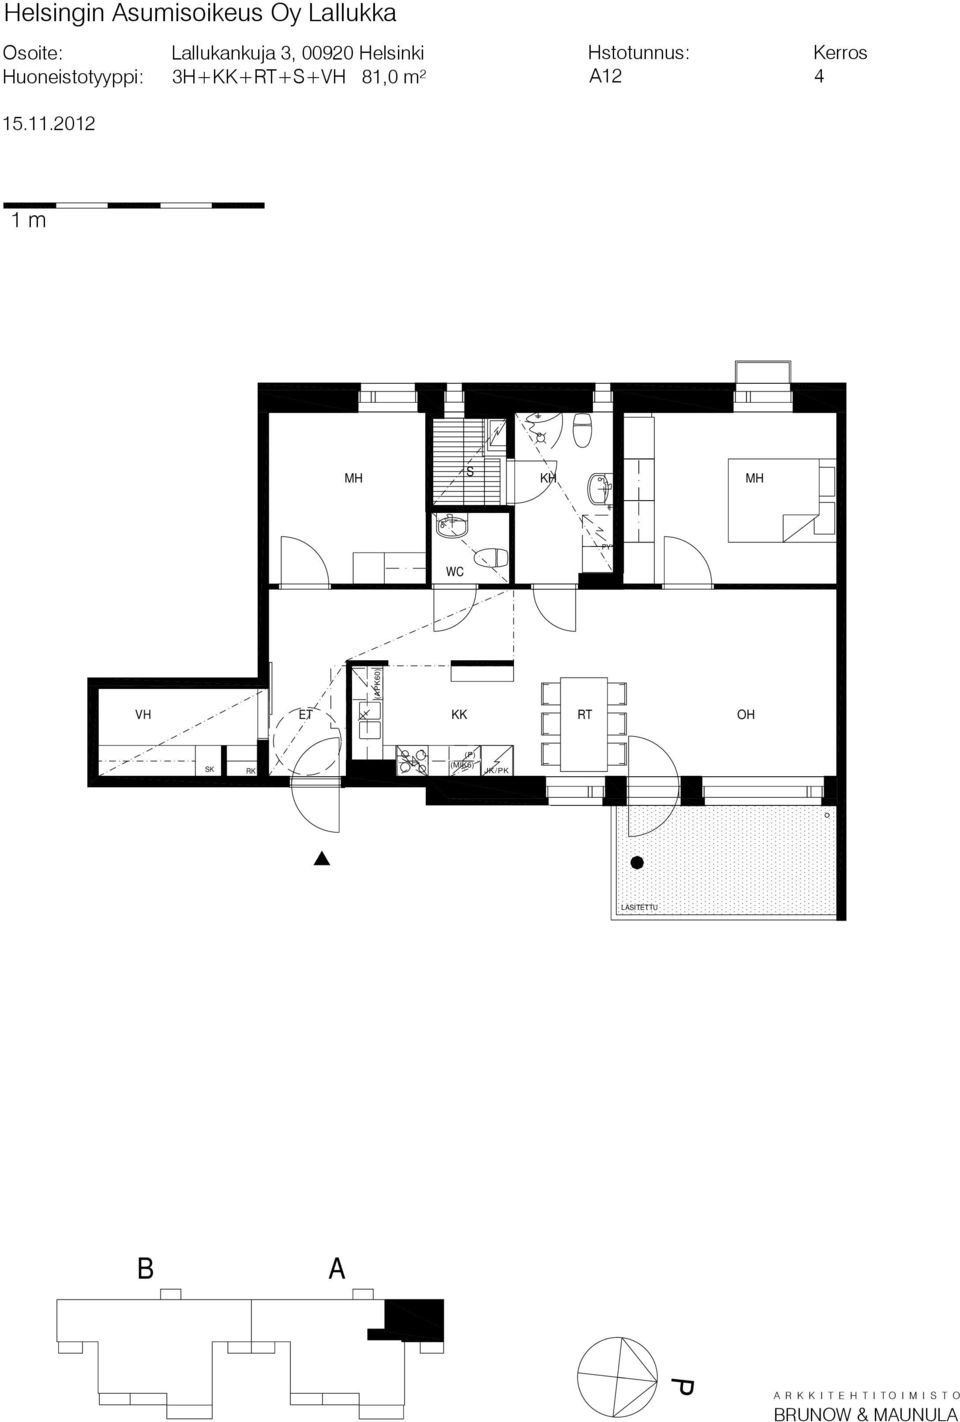 Huoneistotyyppi: 3H++++ 81,0 m² 12 4